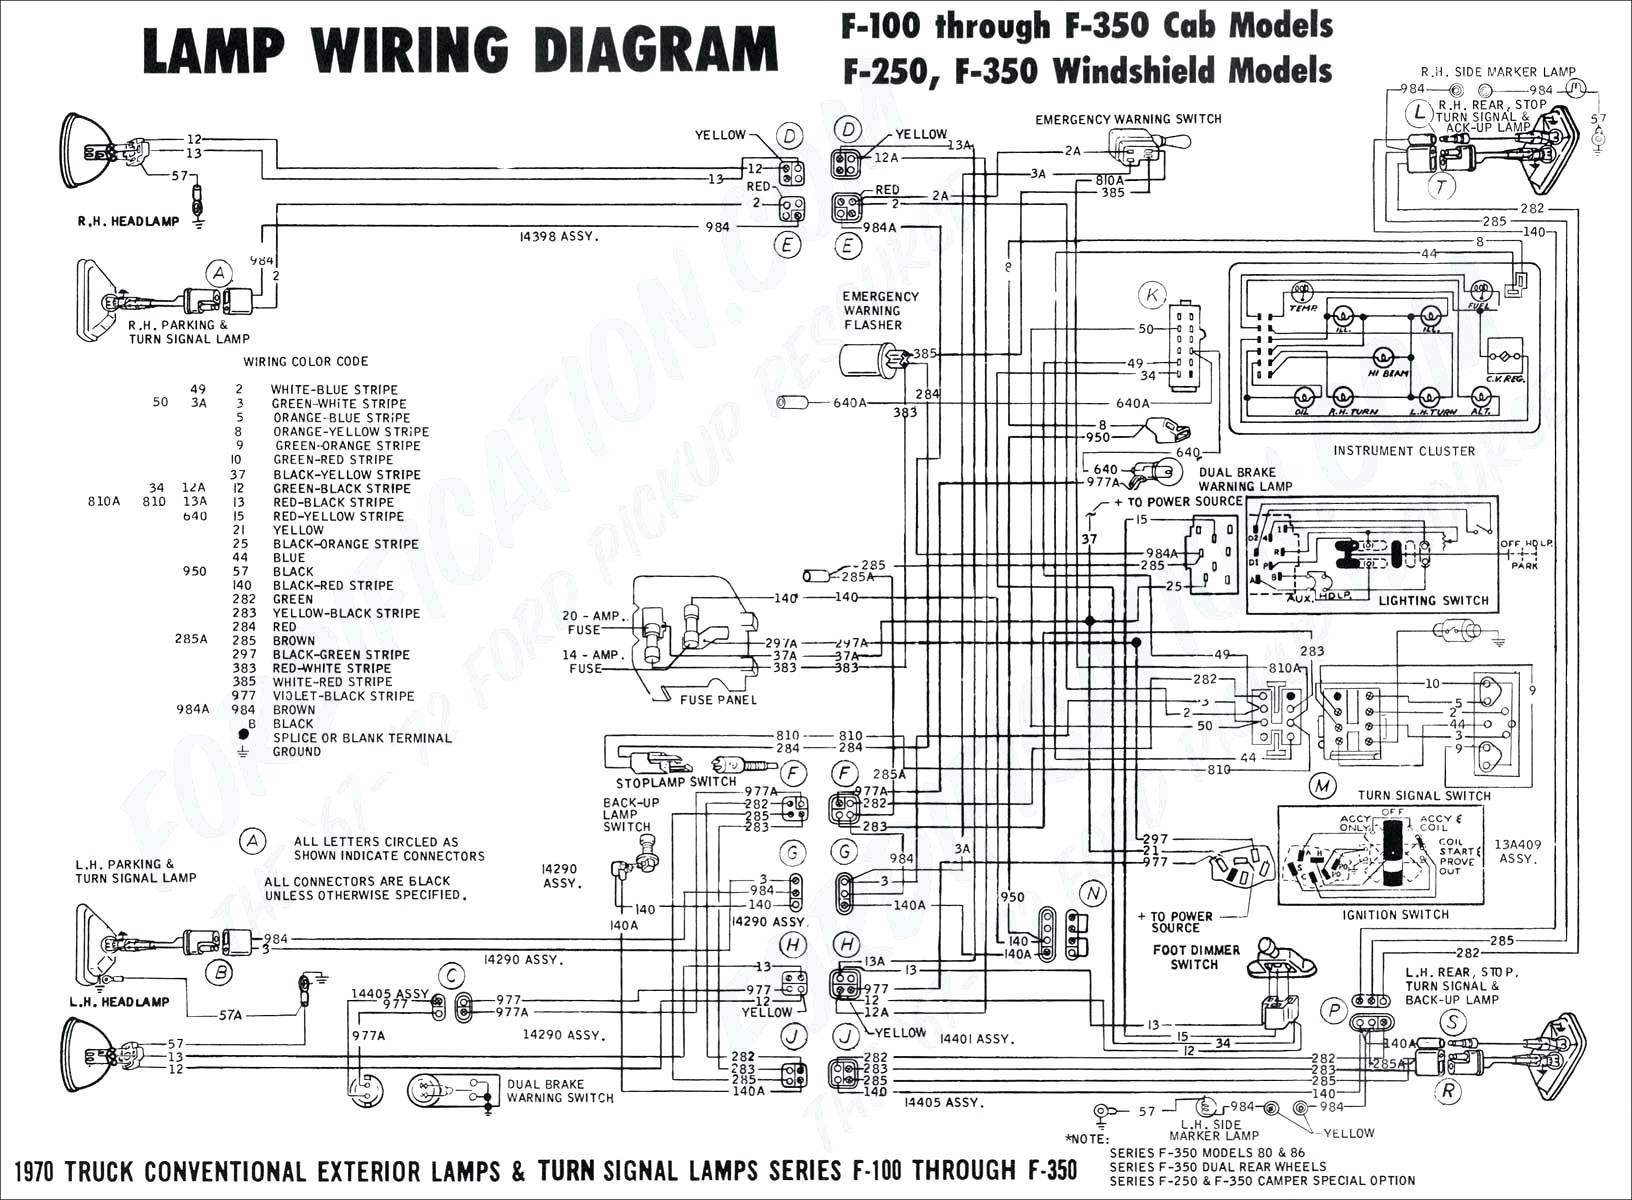 E1eh 015ha Wiring Diagram Elegant Ford 7 Way Trailer Wiring Diagram Image